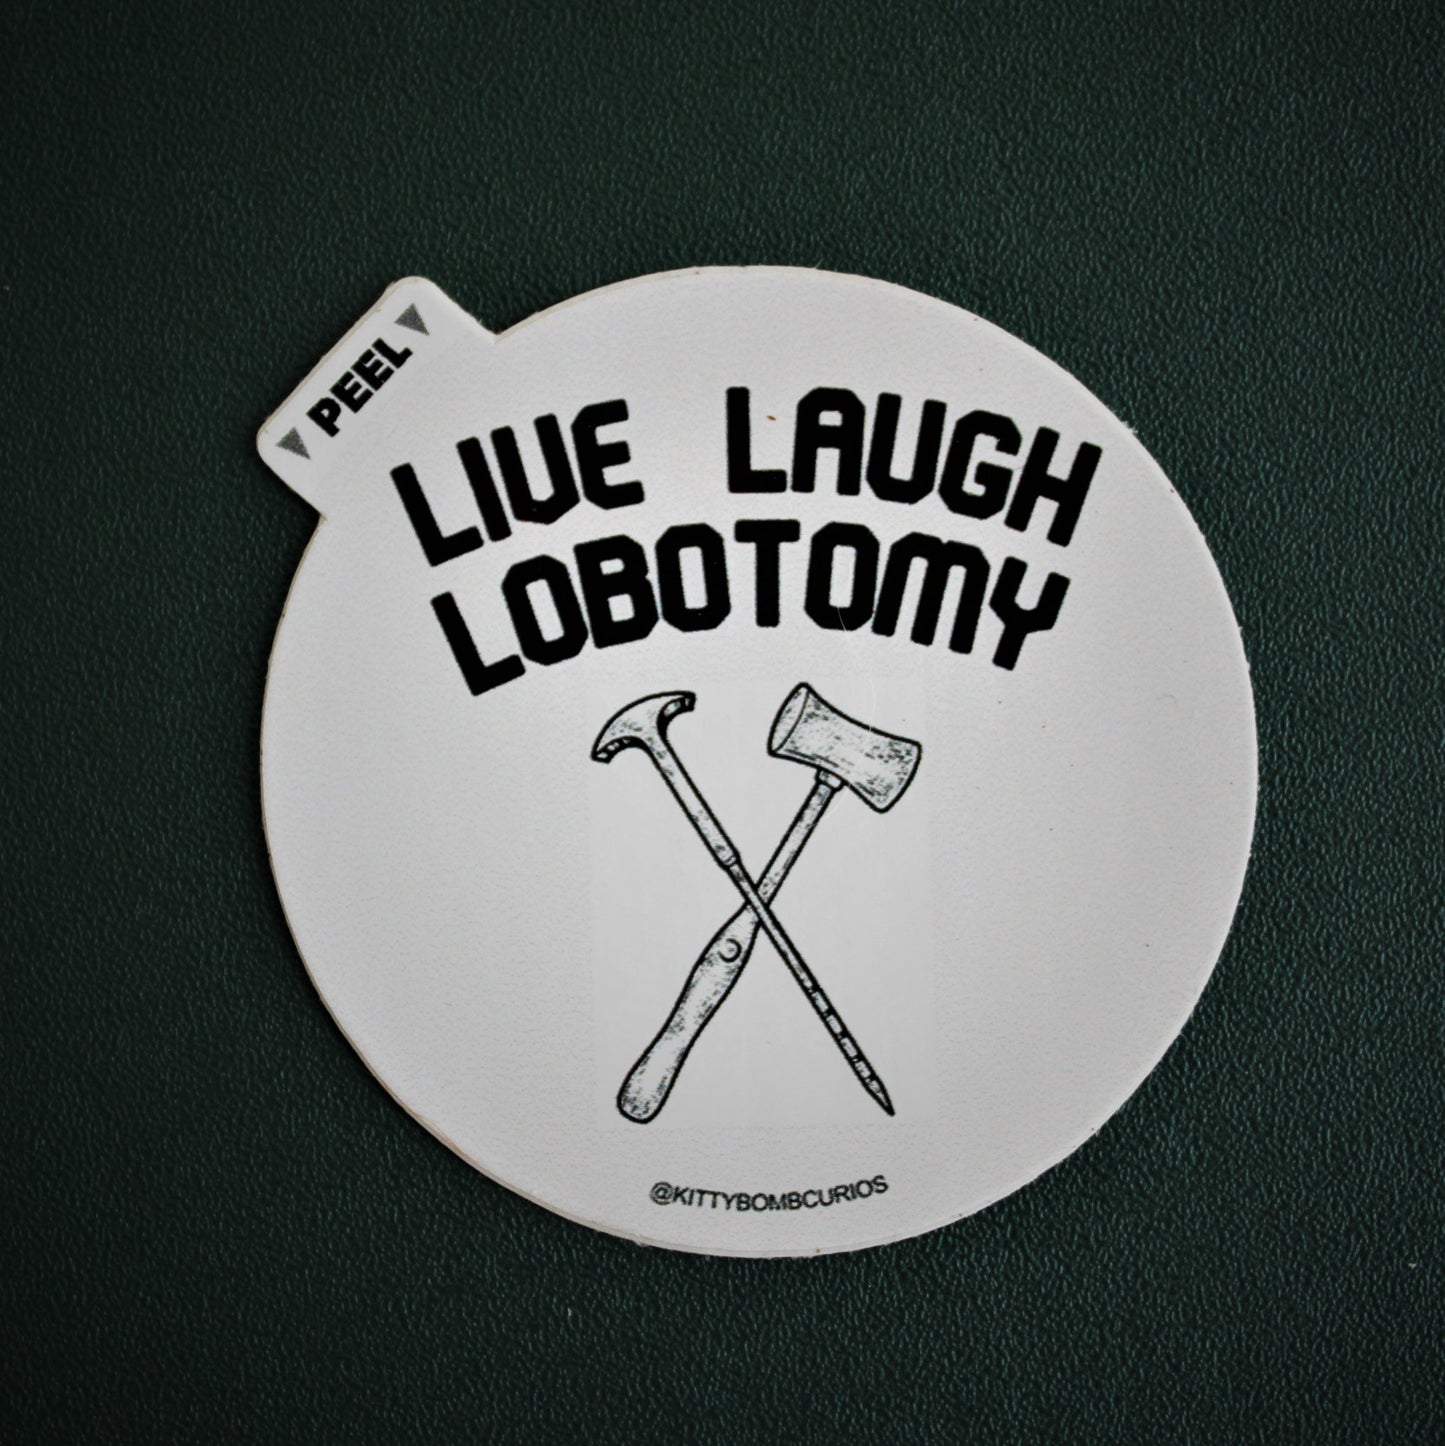 Lobotomy Sticker (Add-On)